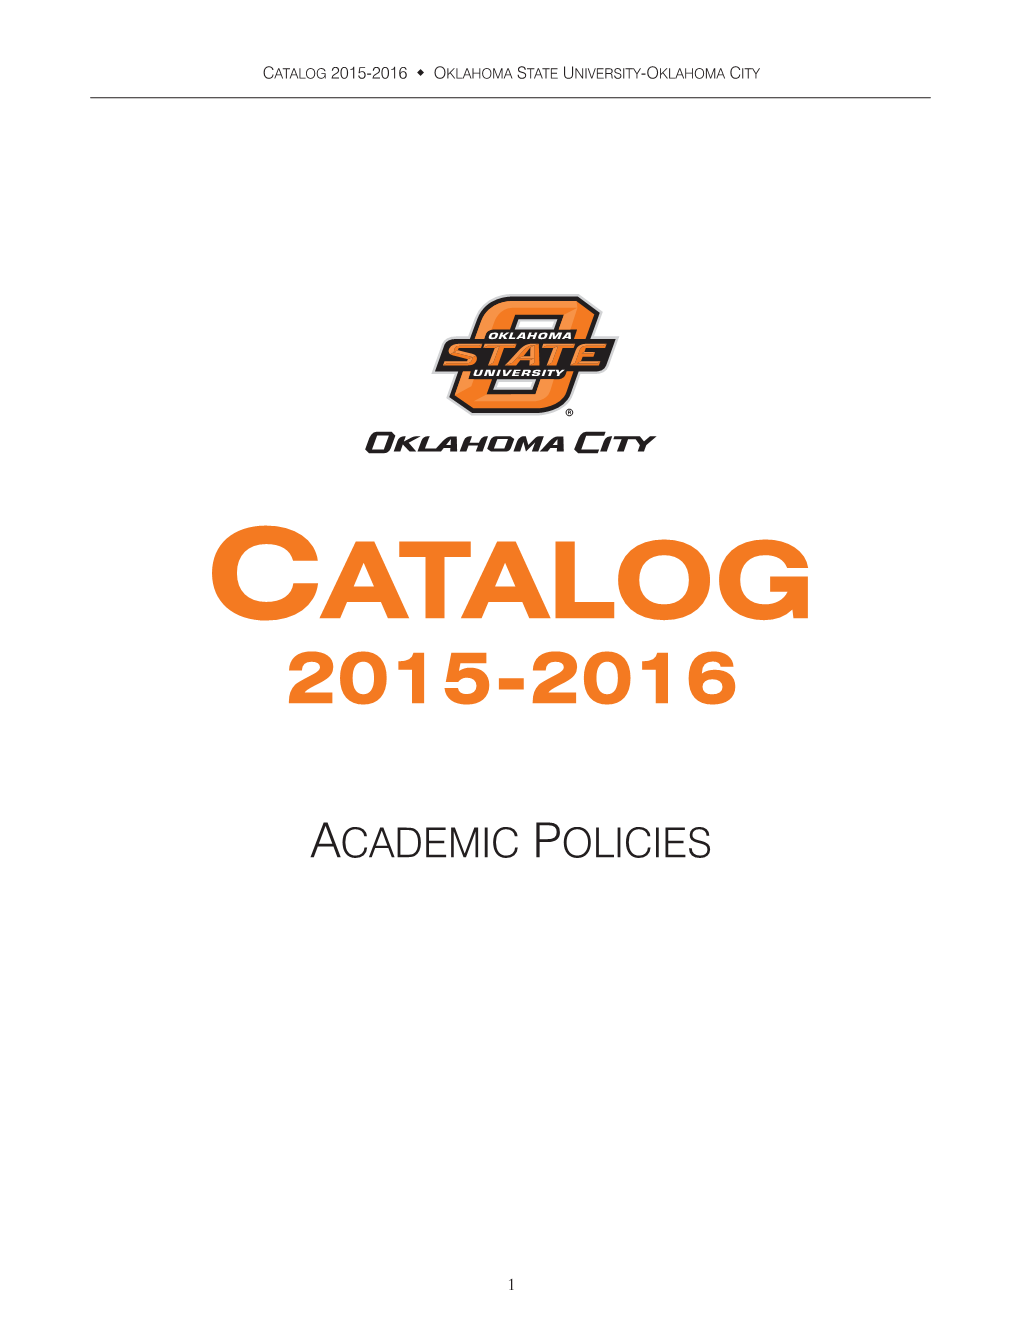 Catalog 2015-16